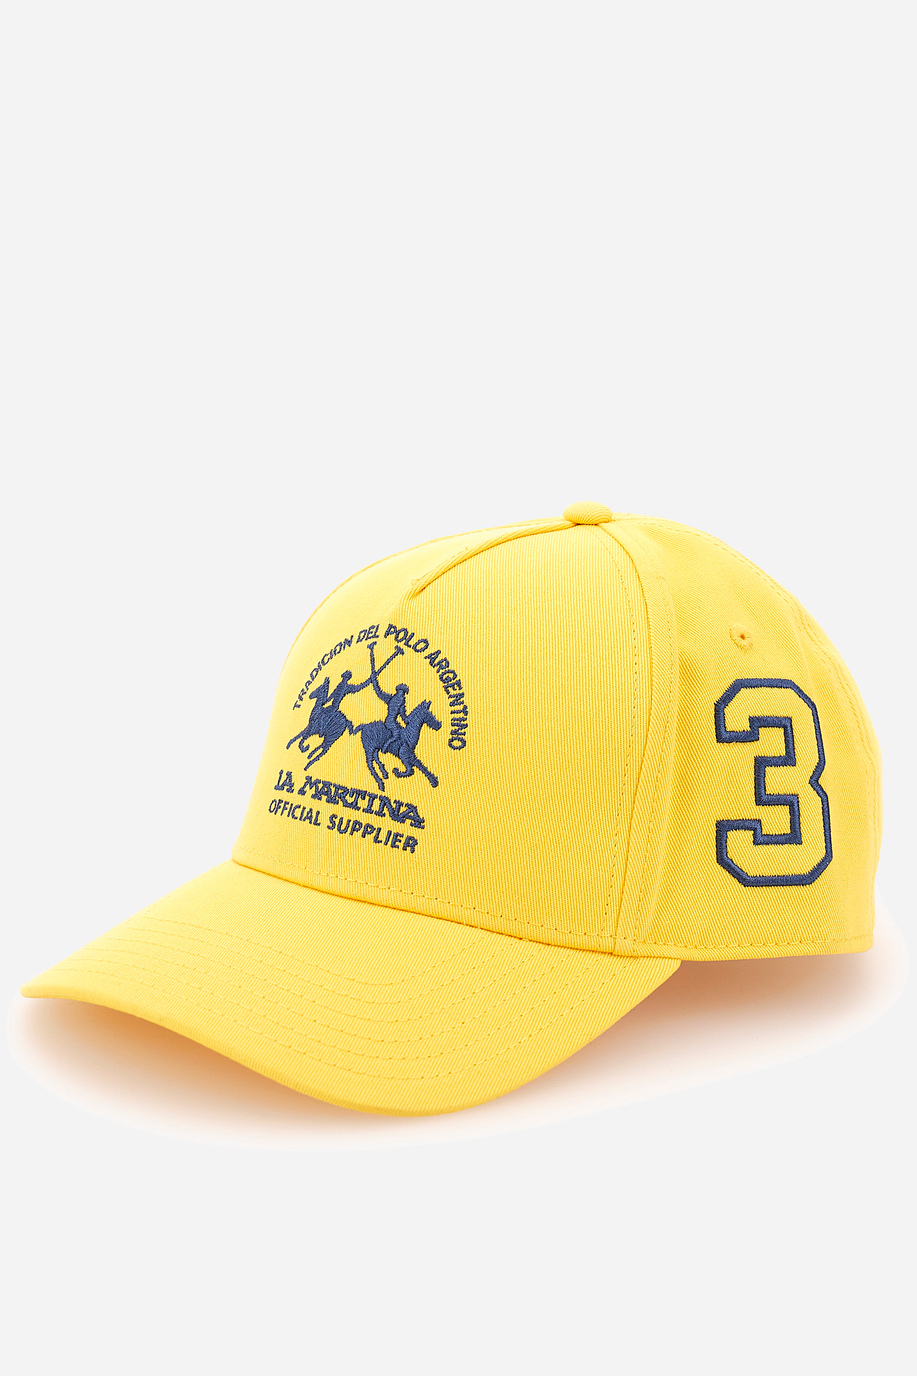 Cotton baseball hat -  Victer - Hats | La Martina - Official Online Shop